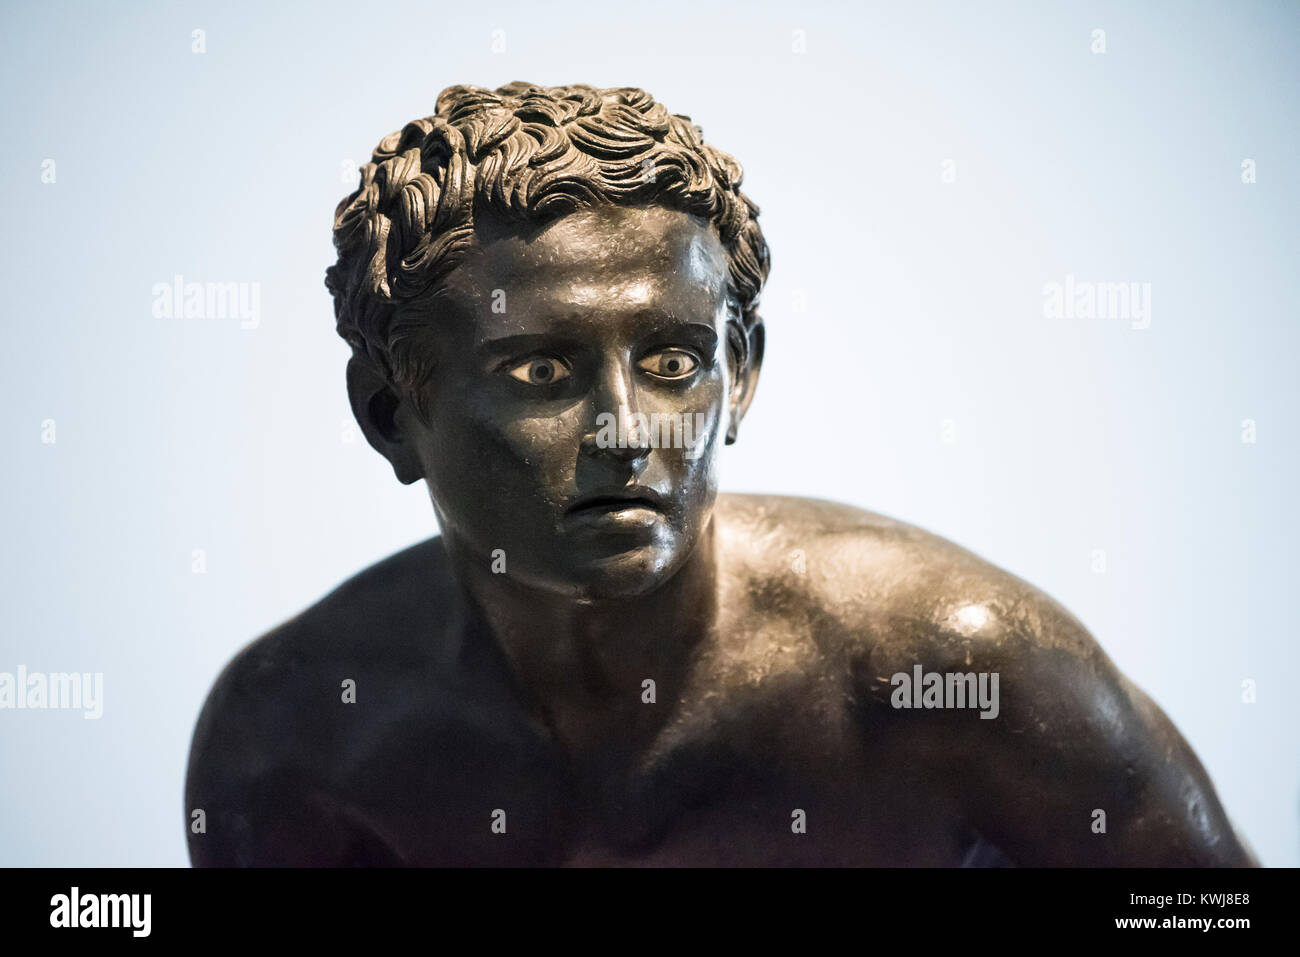 Neapel. Italien. Bronzestatue eines Athleten aus der Villa dei Papiri in Herculaneum. Museo Archeologico Nazionale di Napoli. Nationale Archäologische M Stockfoto